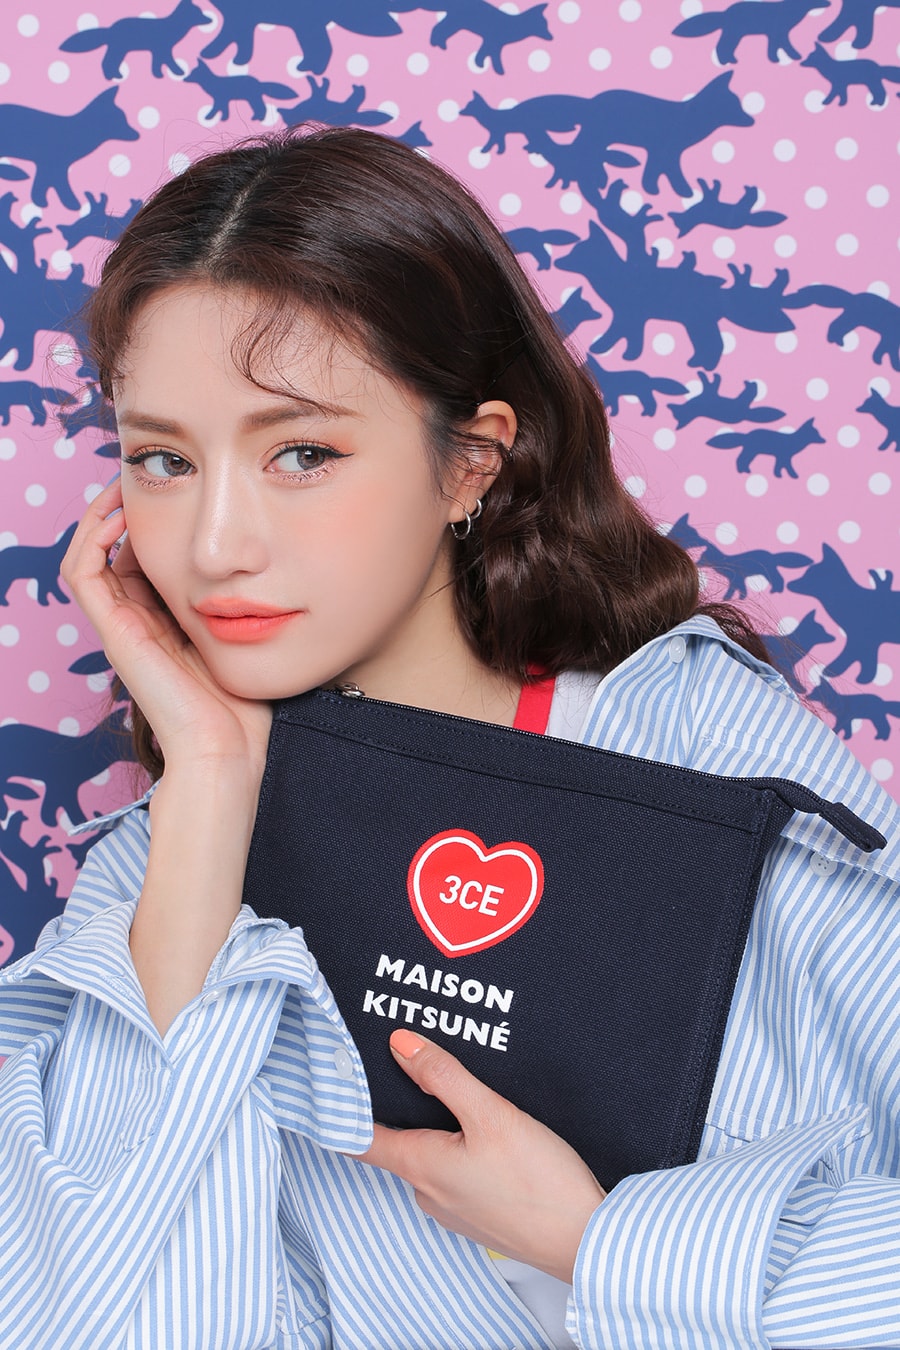 Maison Kitsuné 3CE Stylenanda Makeup Collection Korean Beauty Pouch Canvas